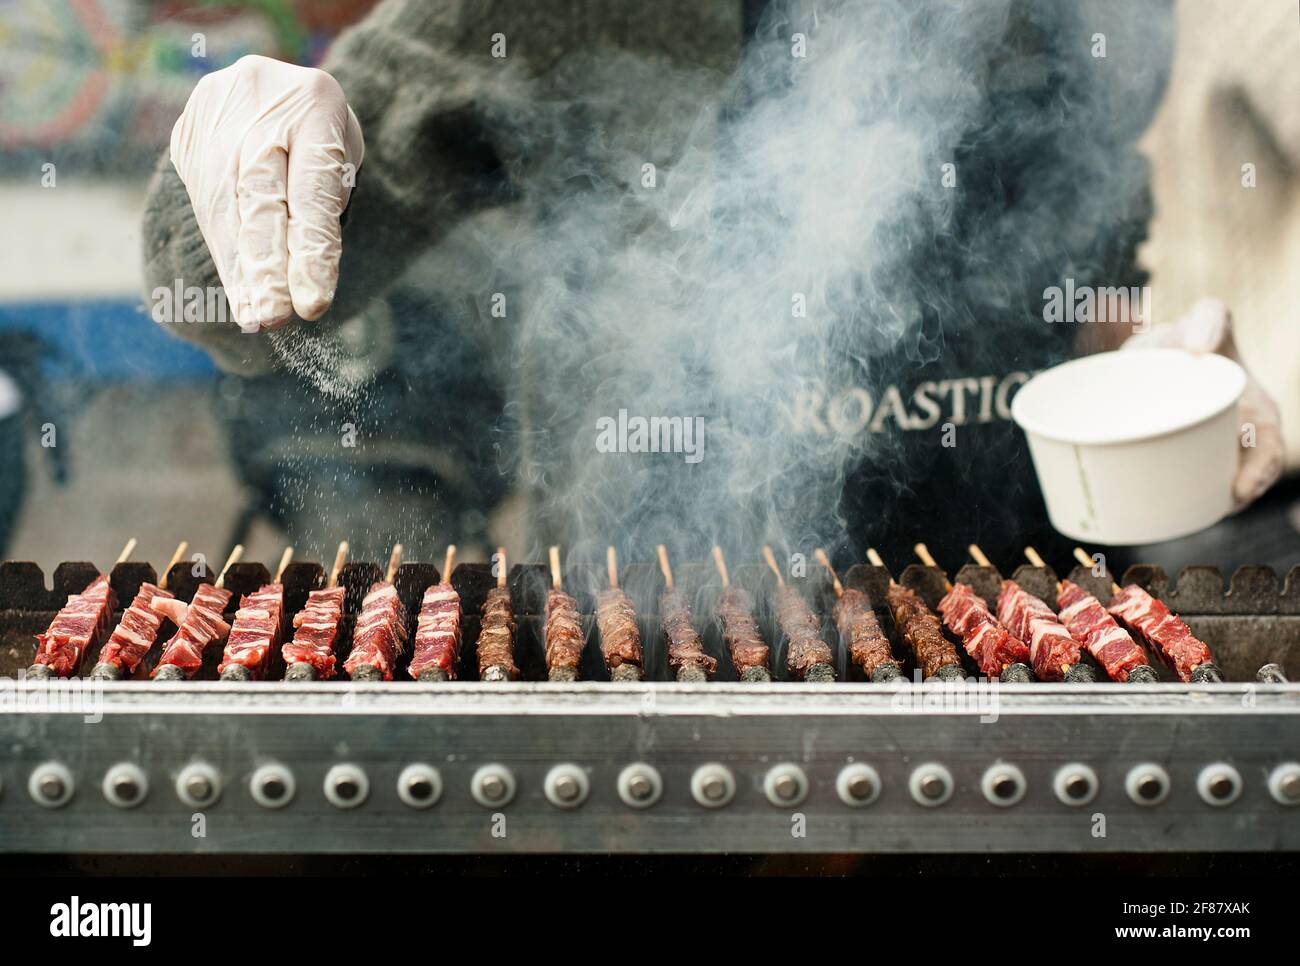 https://c8.alamy.com/comp/2F87XAK/close-up-of-hands-salting-kebab-style-skewers-meat-roasting-on-bbq-grill-machine-at-a-pop-up-food-market-brick-lane-london-uk-apr-2014-2F87XAK.jpg